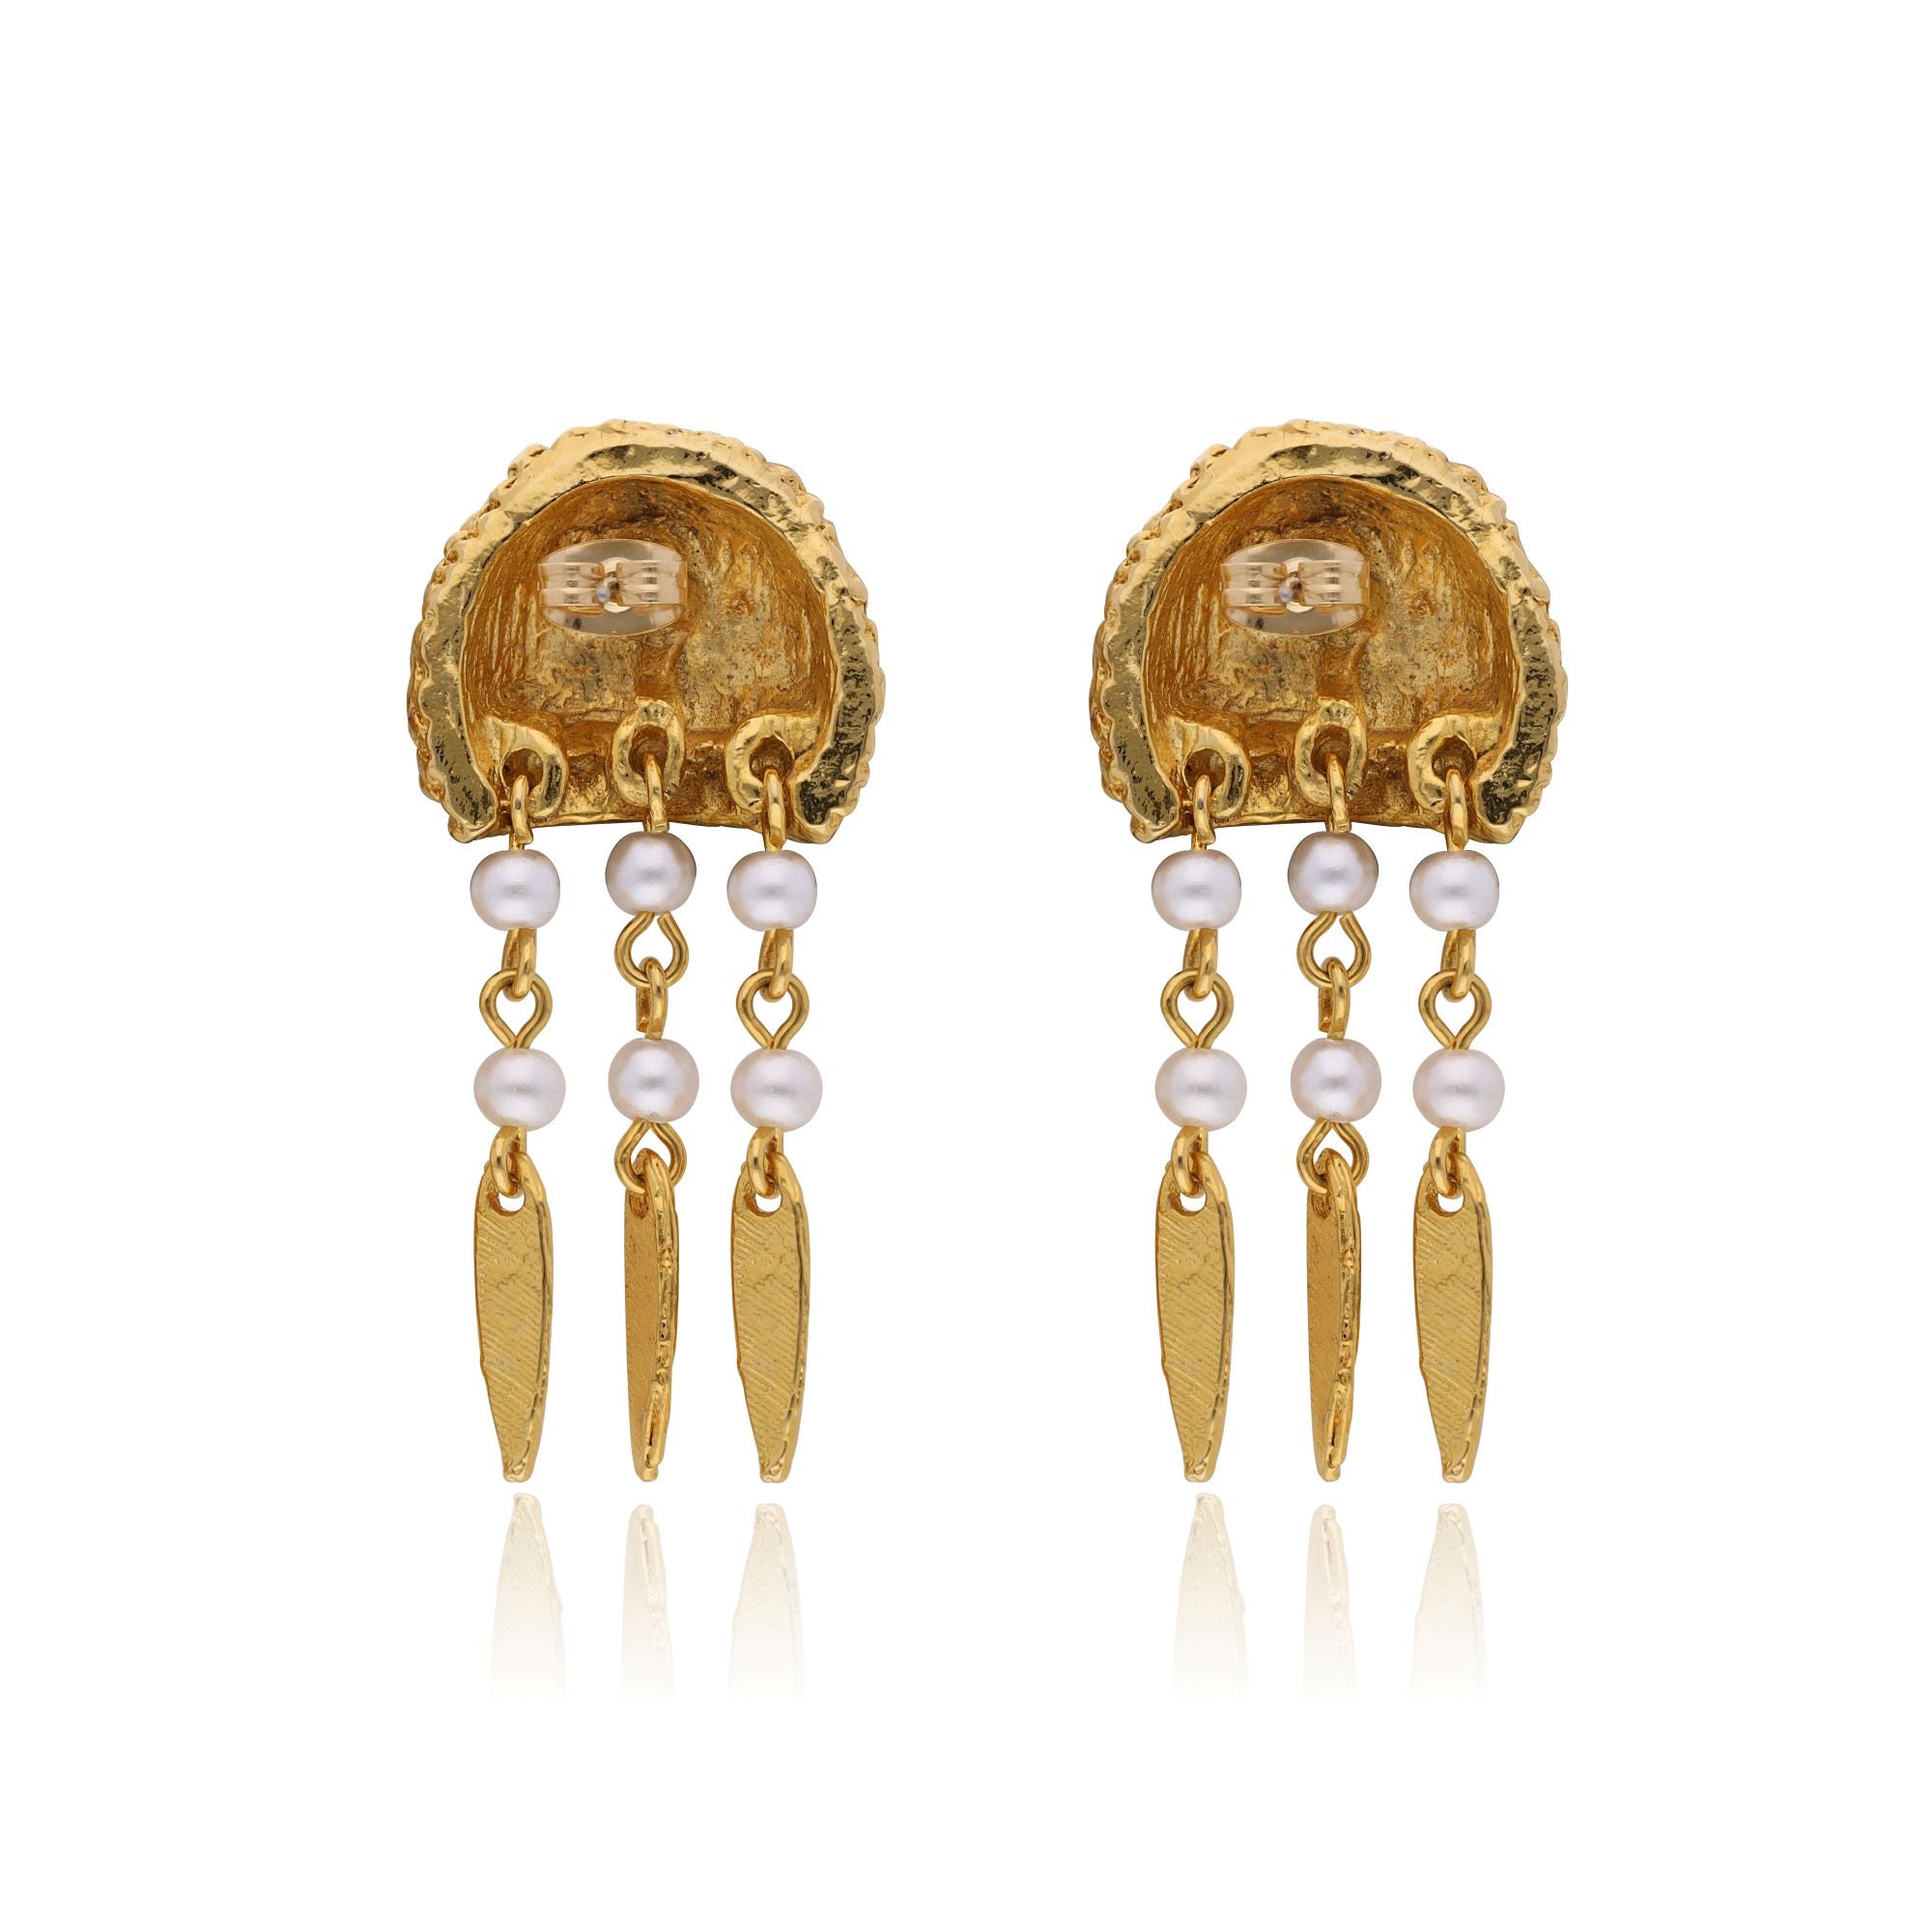 Vintage jelly fish dangling earrings